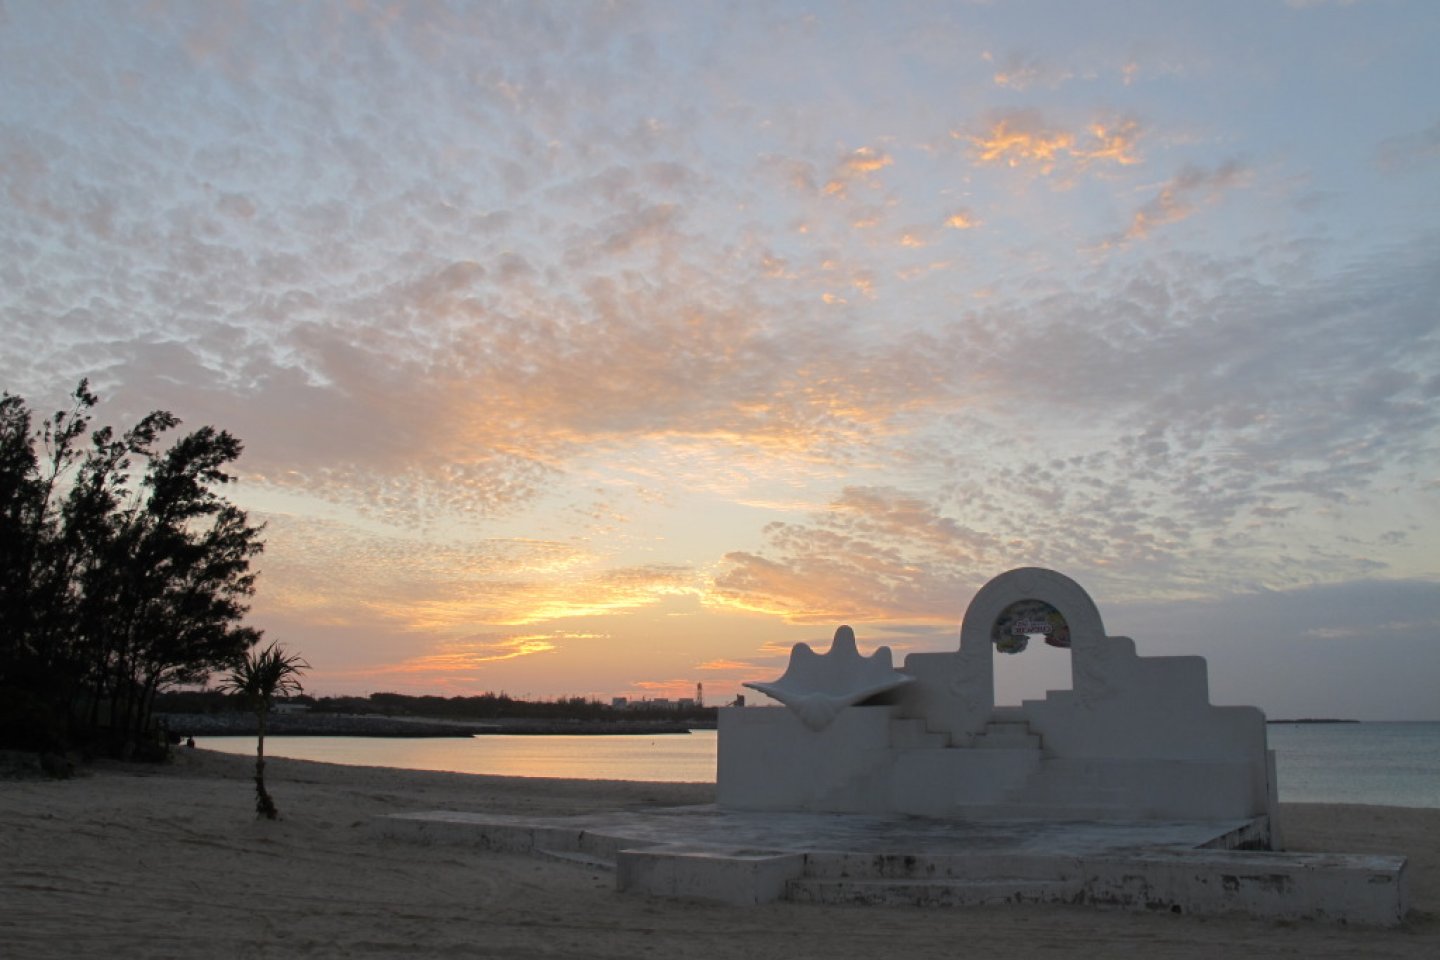 Sunset over the beach at Yoron\'s main town, Chabana